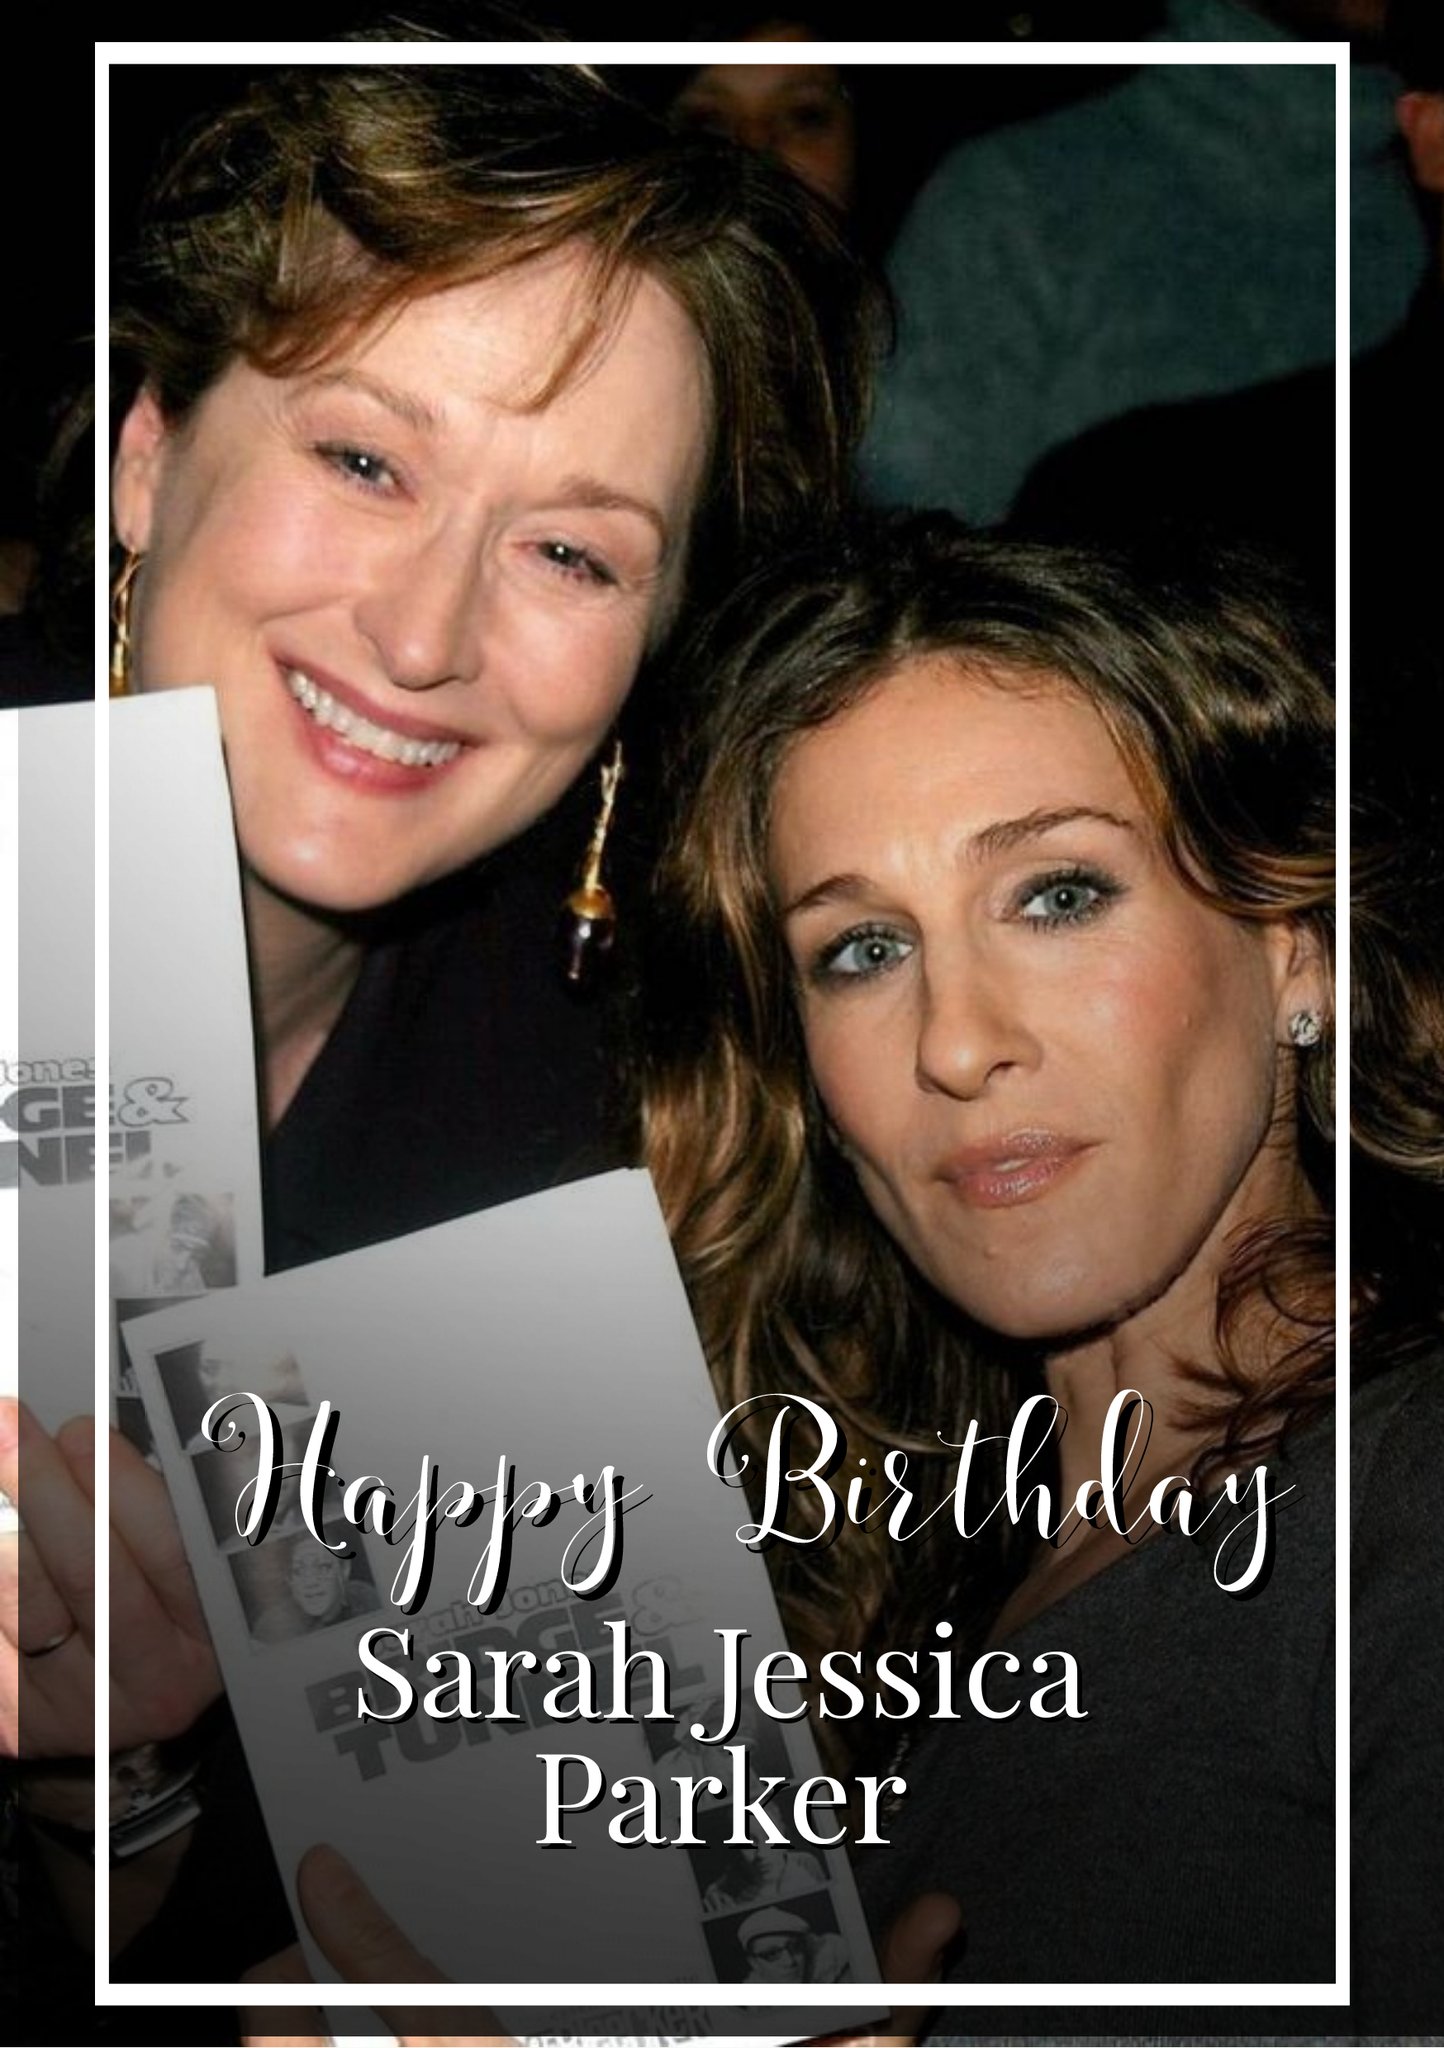 Happy Birthday!
Sarah Jessica Parker.  